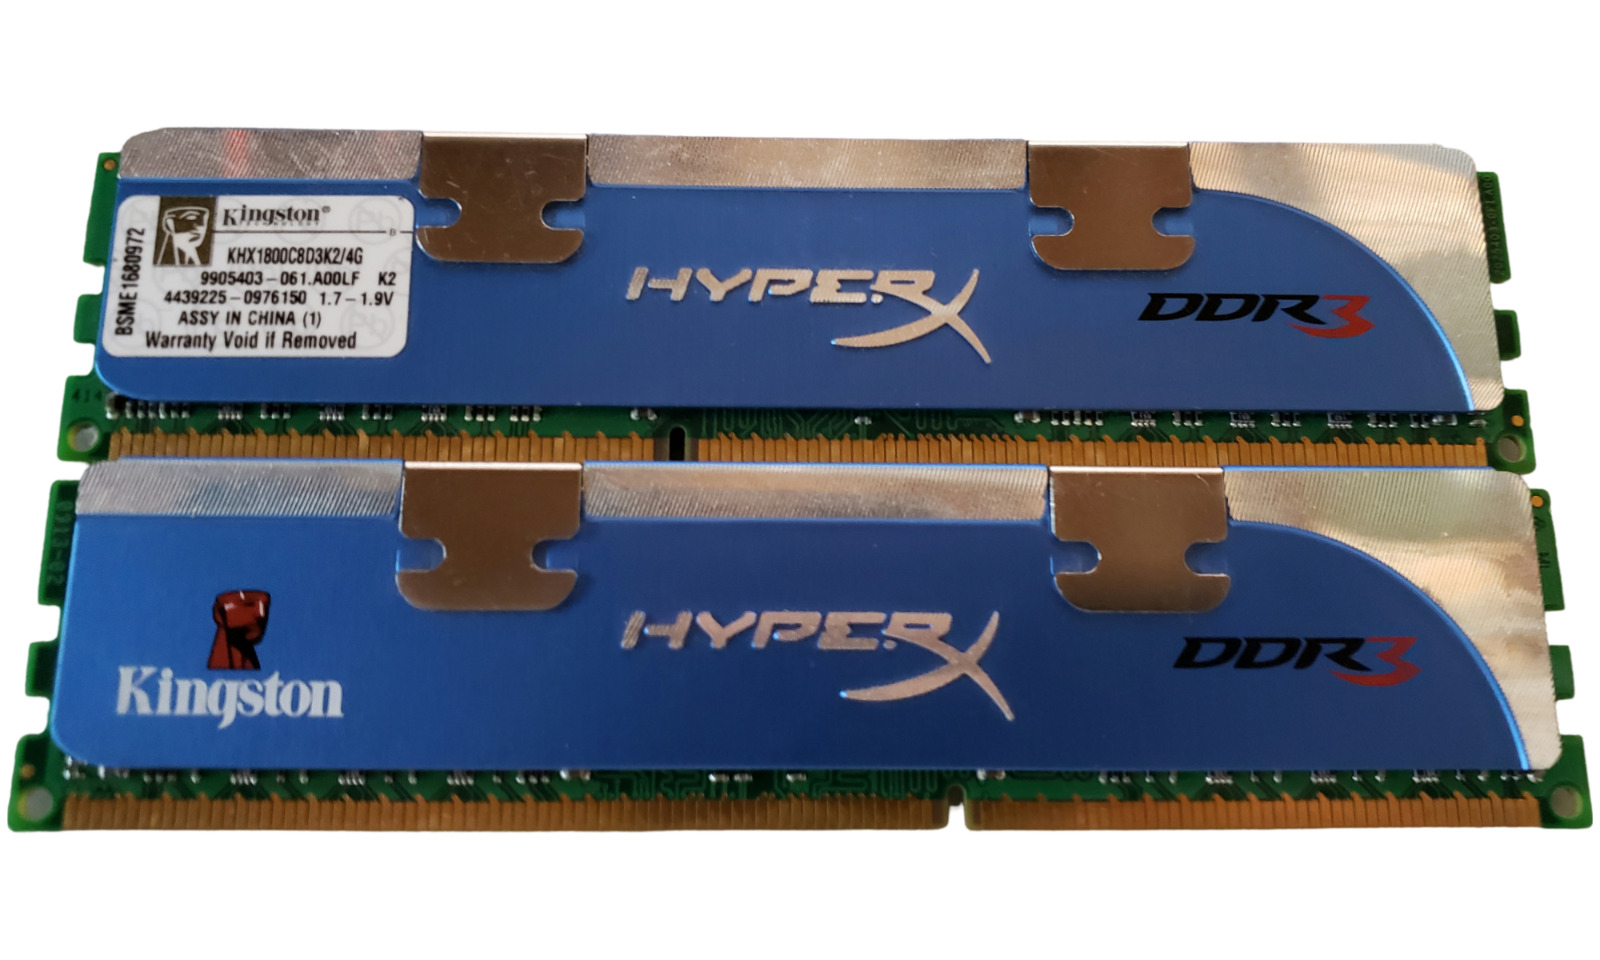 (2 Piece) Kingston HyperX KHX1800C8D3K2/4G DDR3-1800 4GB (2x2GB) Memory | Rare